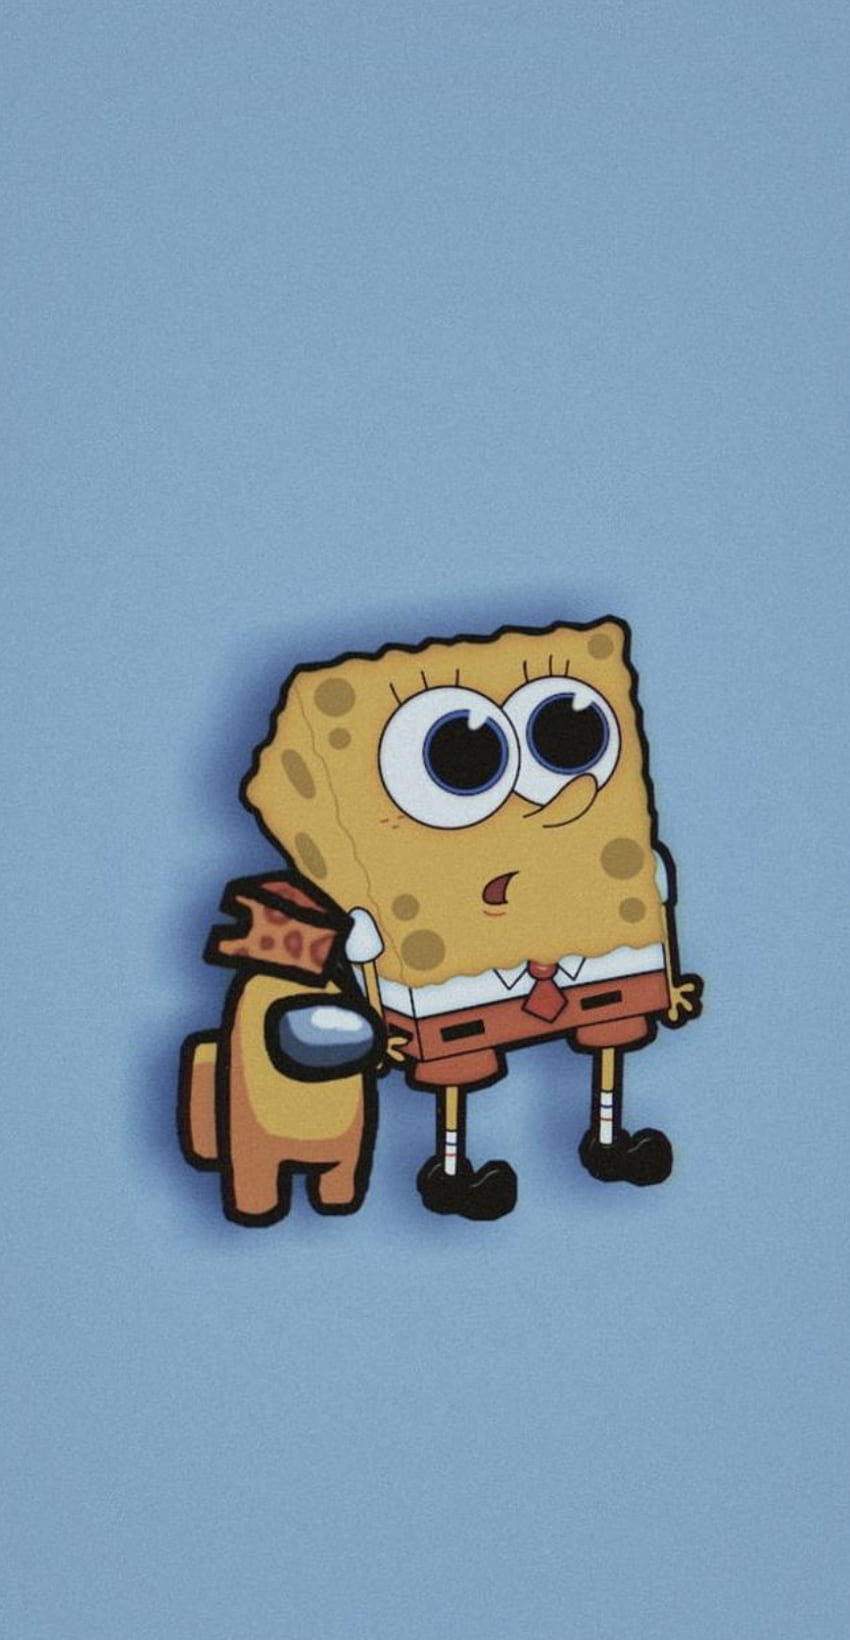 A sponge with an eye on his head - SpongeBob